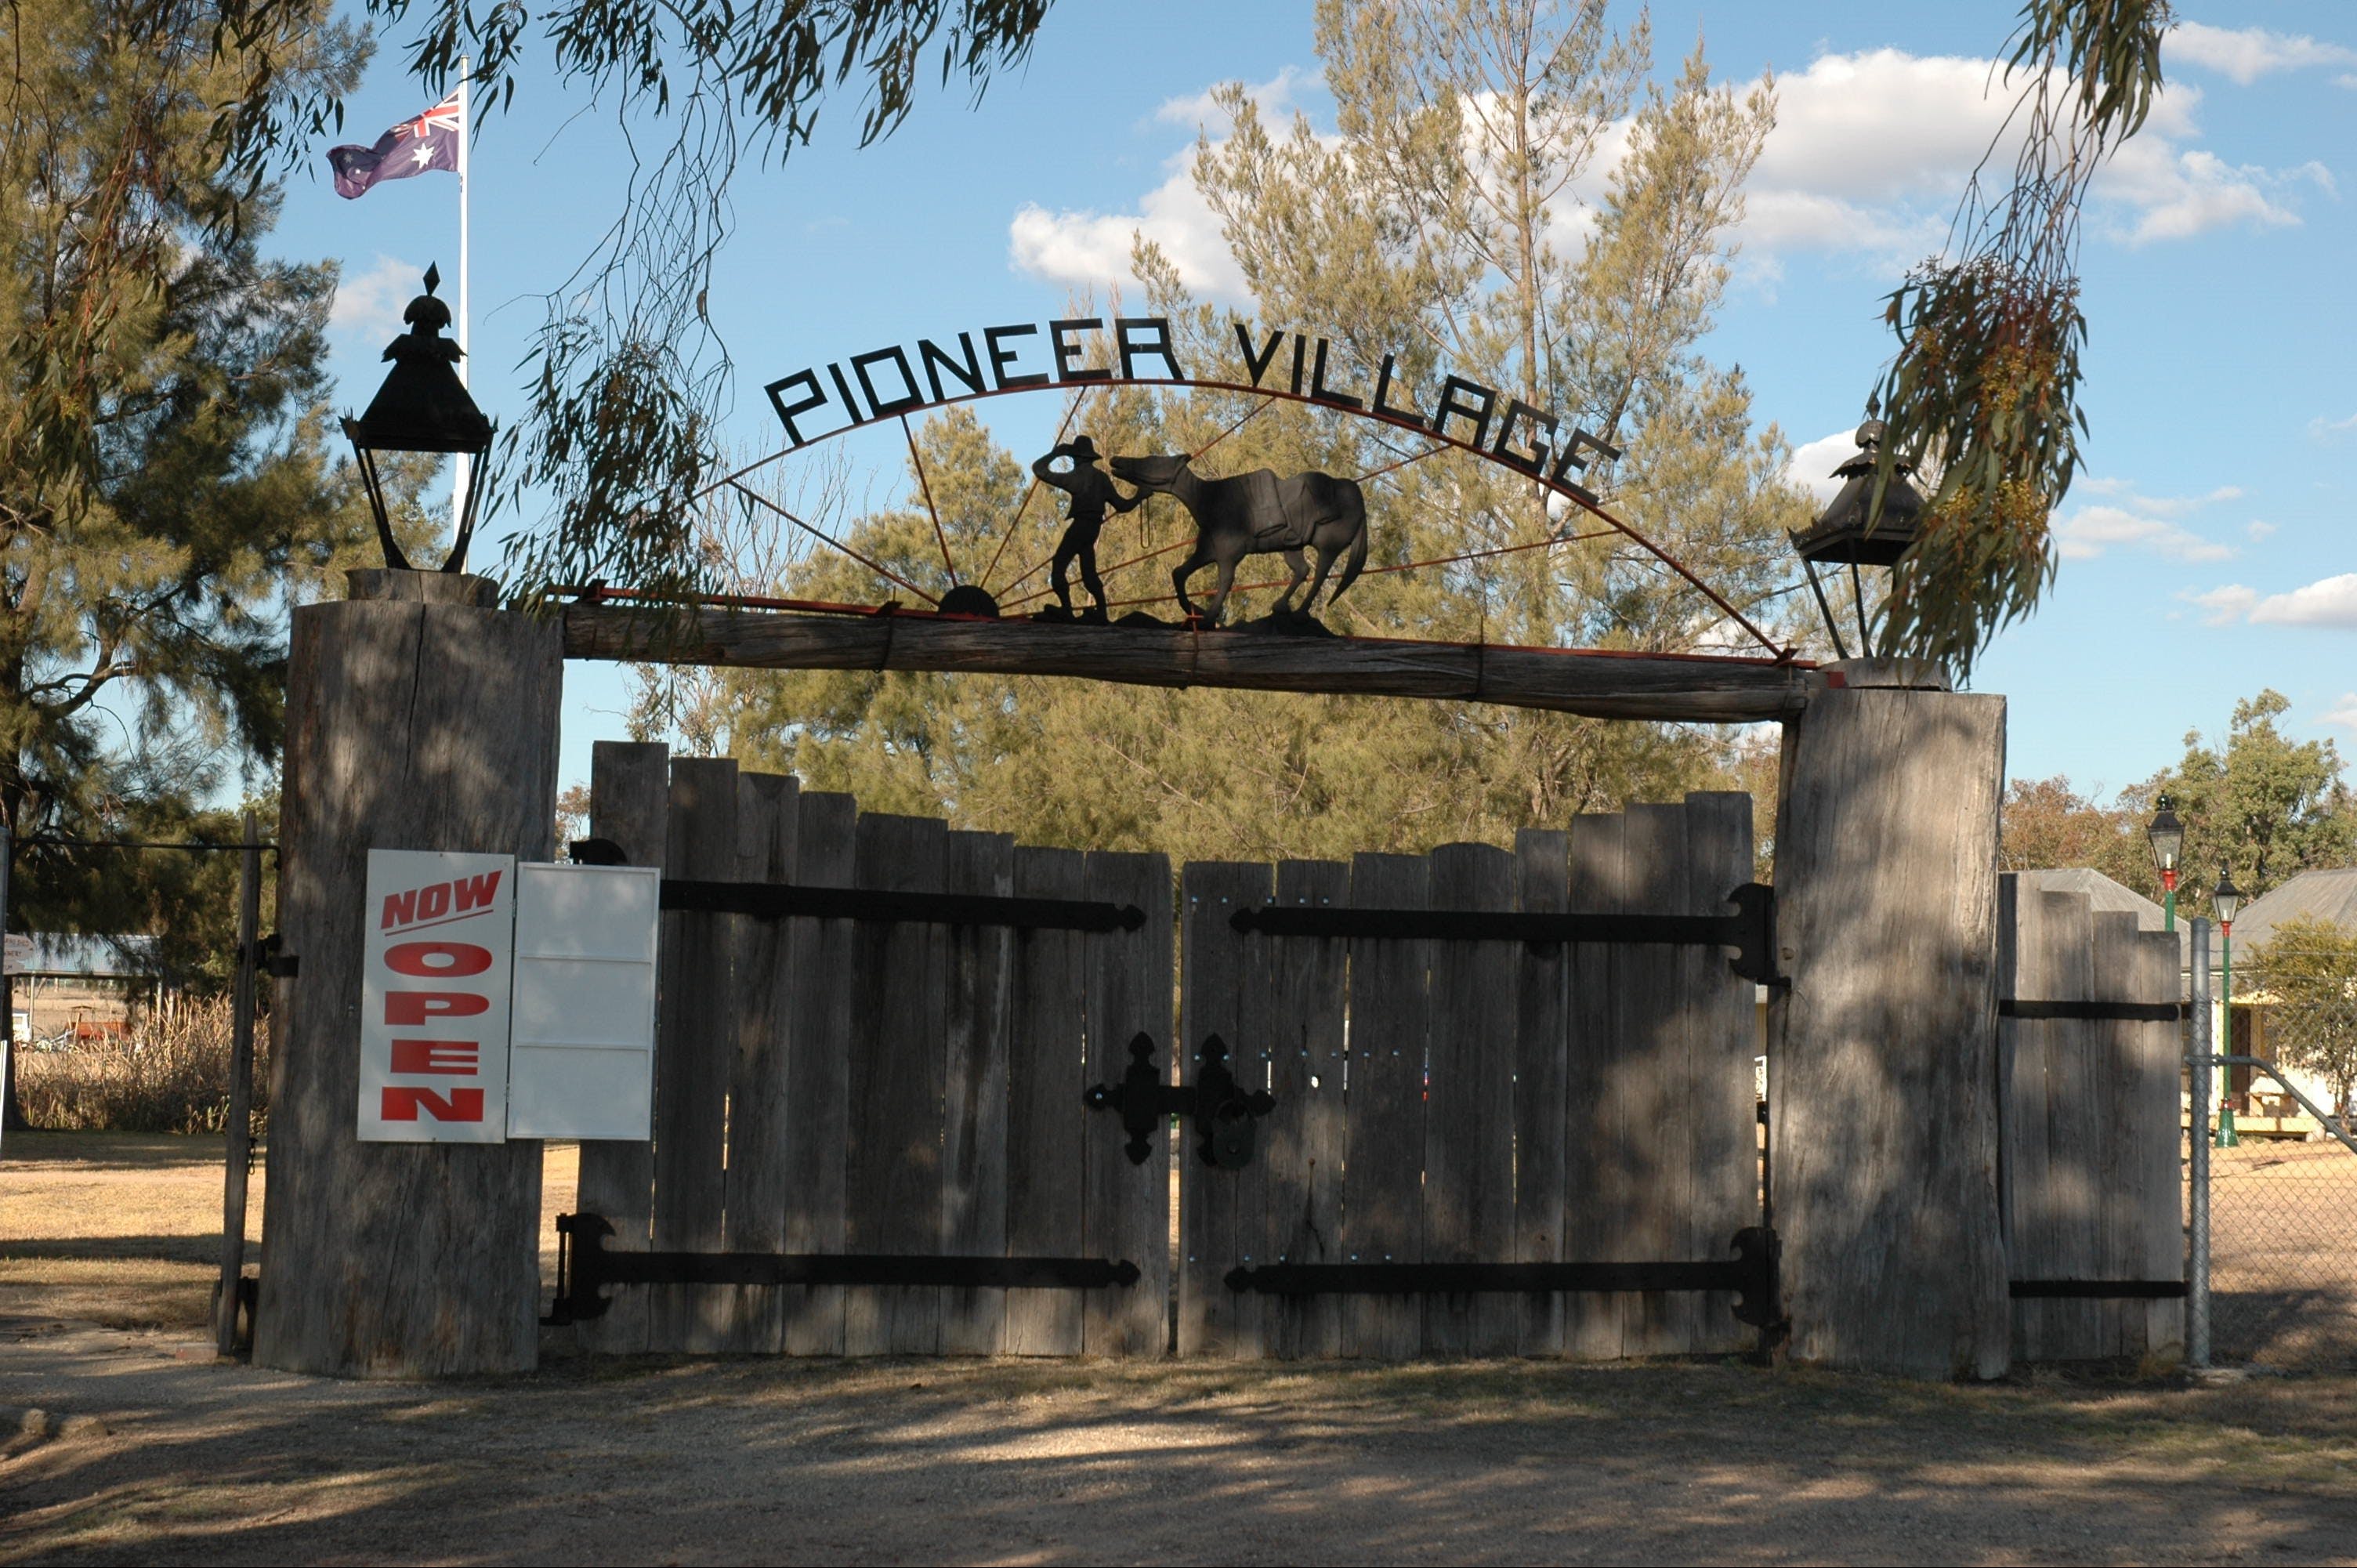 Inverell Pioneer Village - Geraldton Accommodation